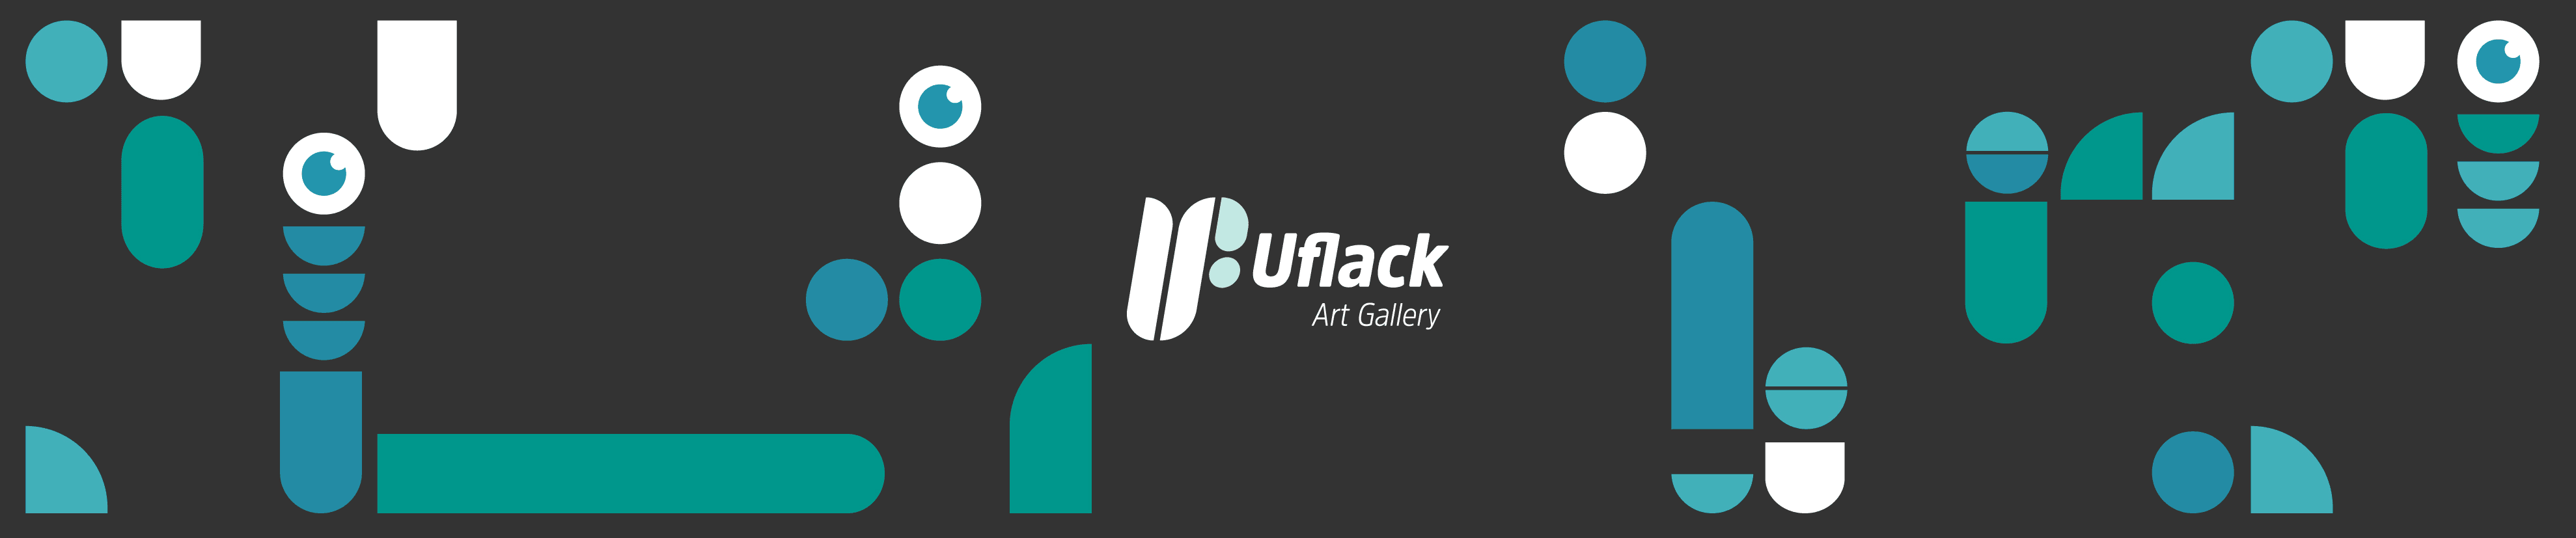 Uflack_Art_Gallery バナー